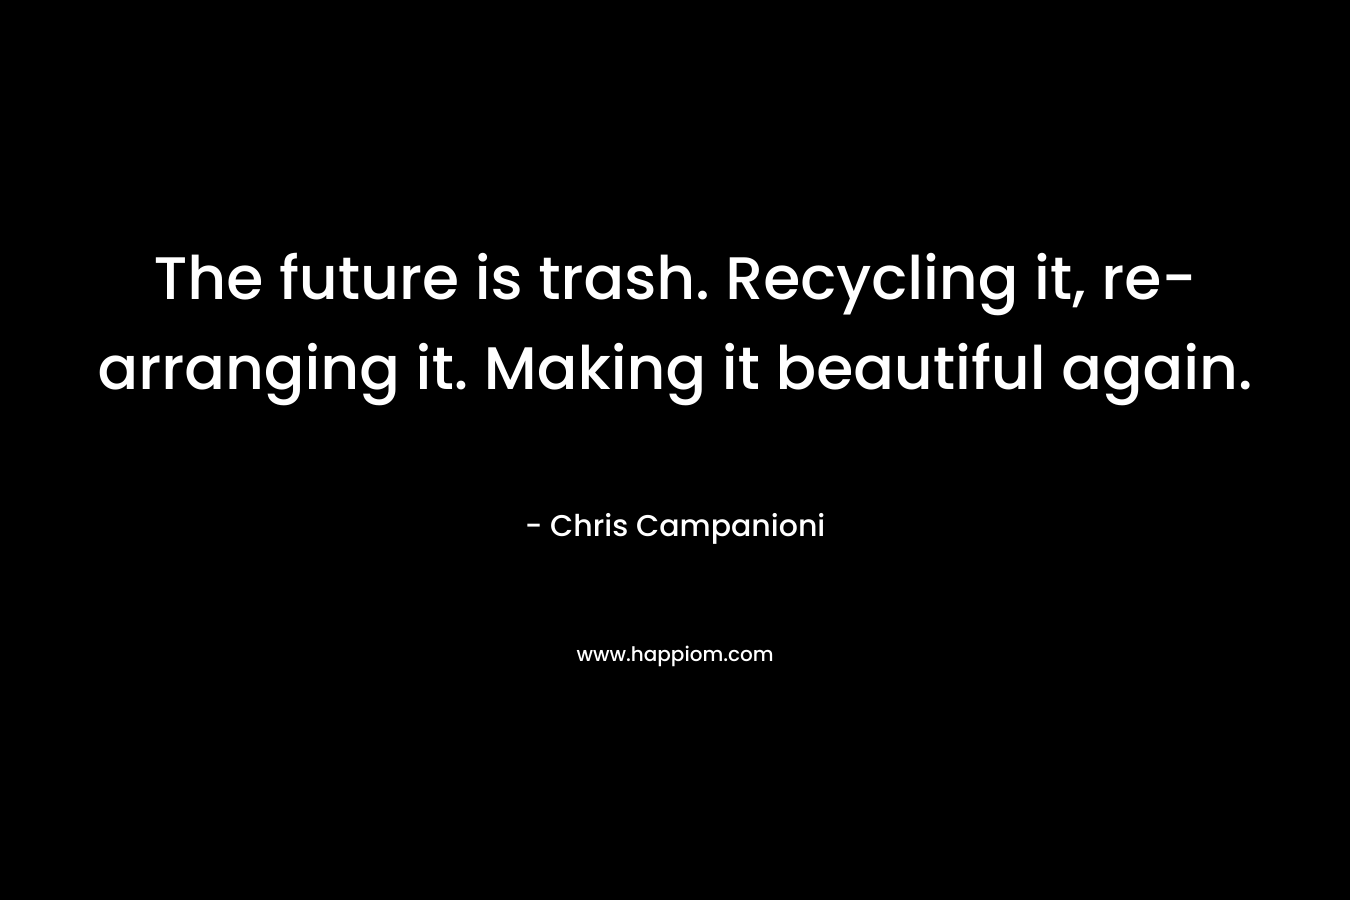 The future is trash. Recycling it, re-arranging it. Making it beautiful again. – Chris Campanioni